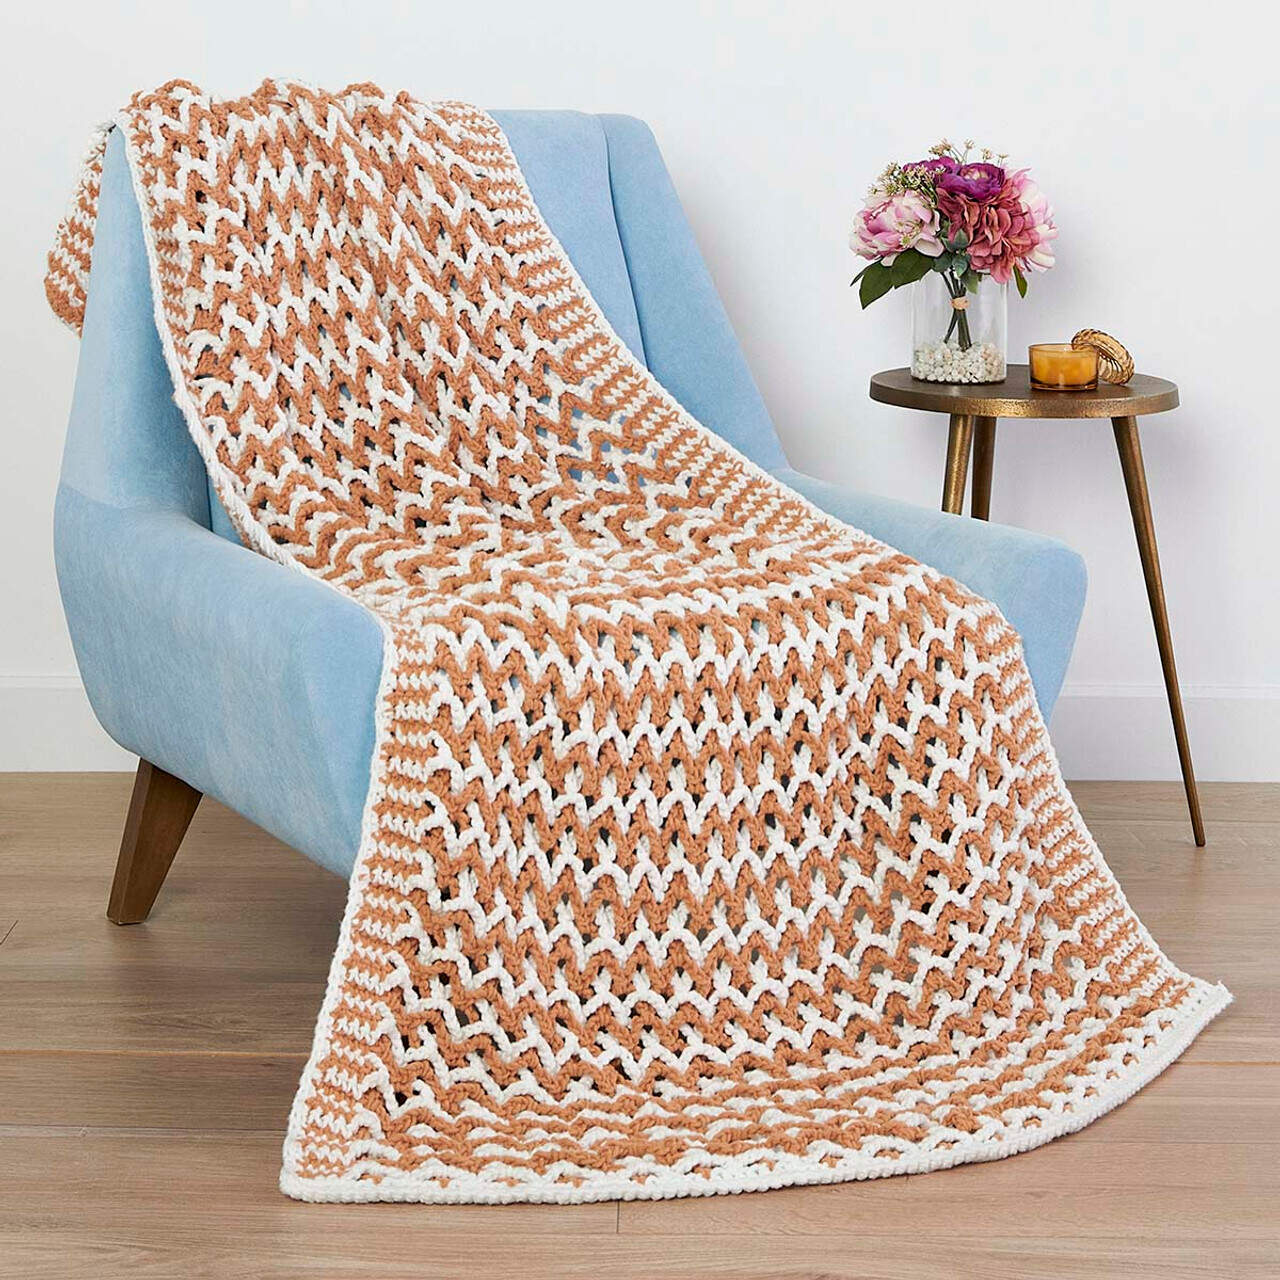 Bernat Cluster Panels Crochet Blanket: Free Pattern and Tutorial